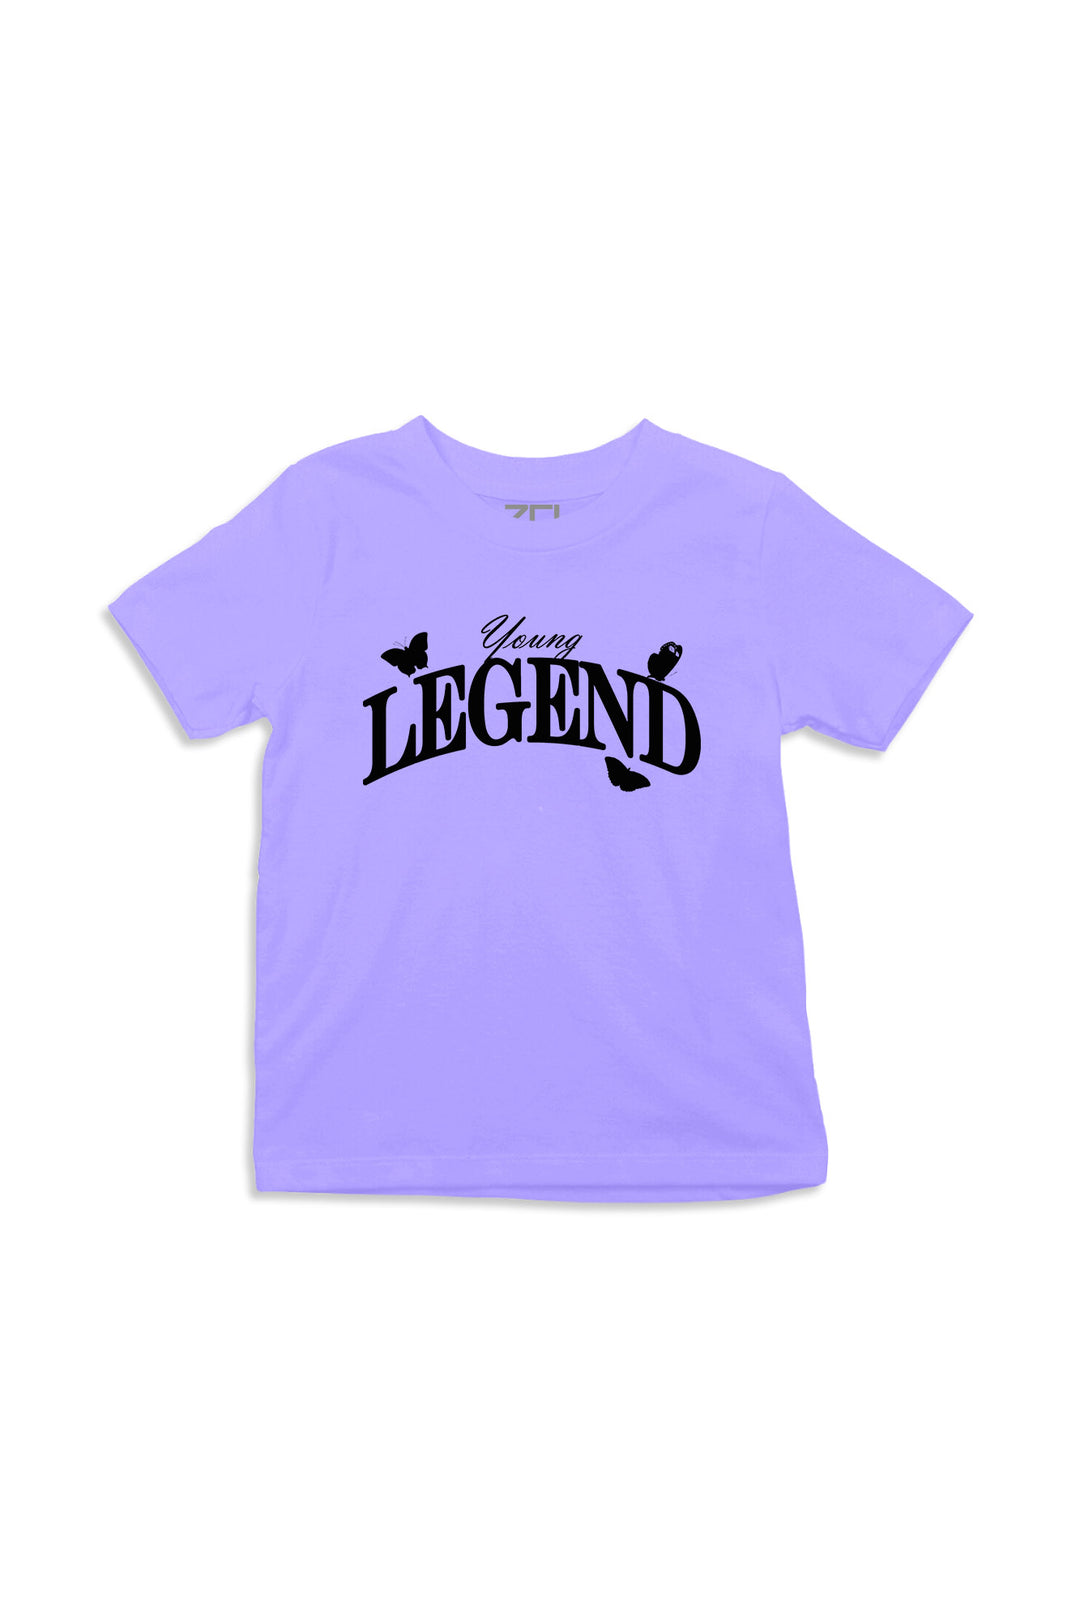 Kids Young Legend Tee (Black Logo) - Zamage